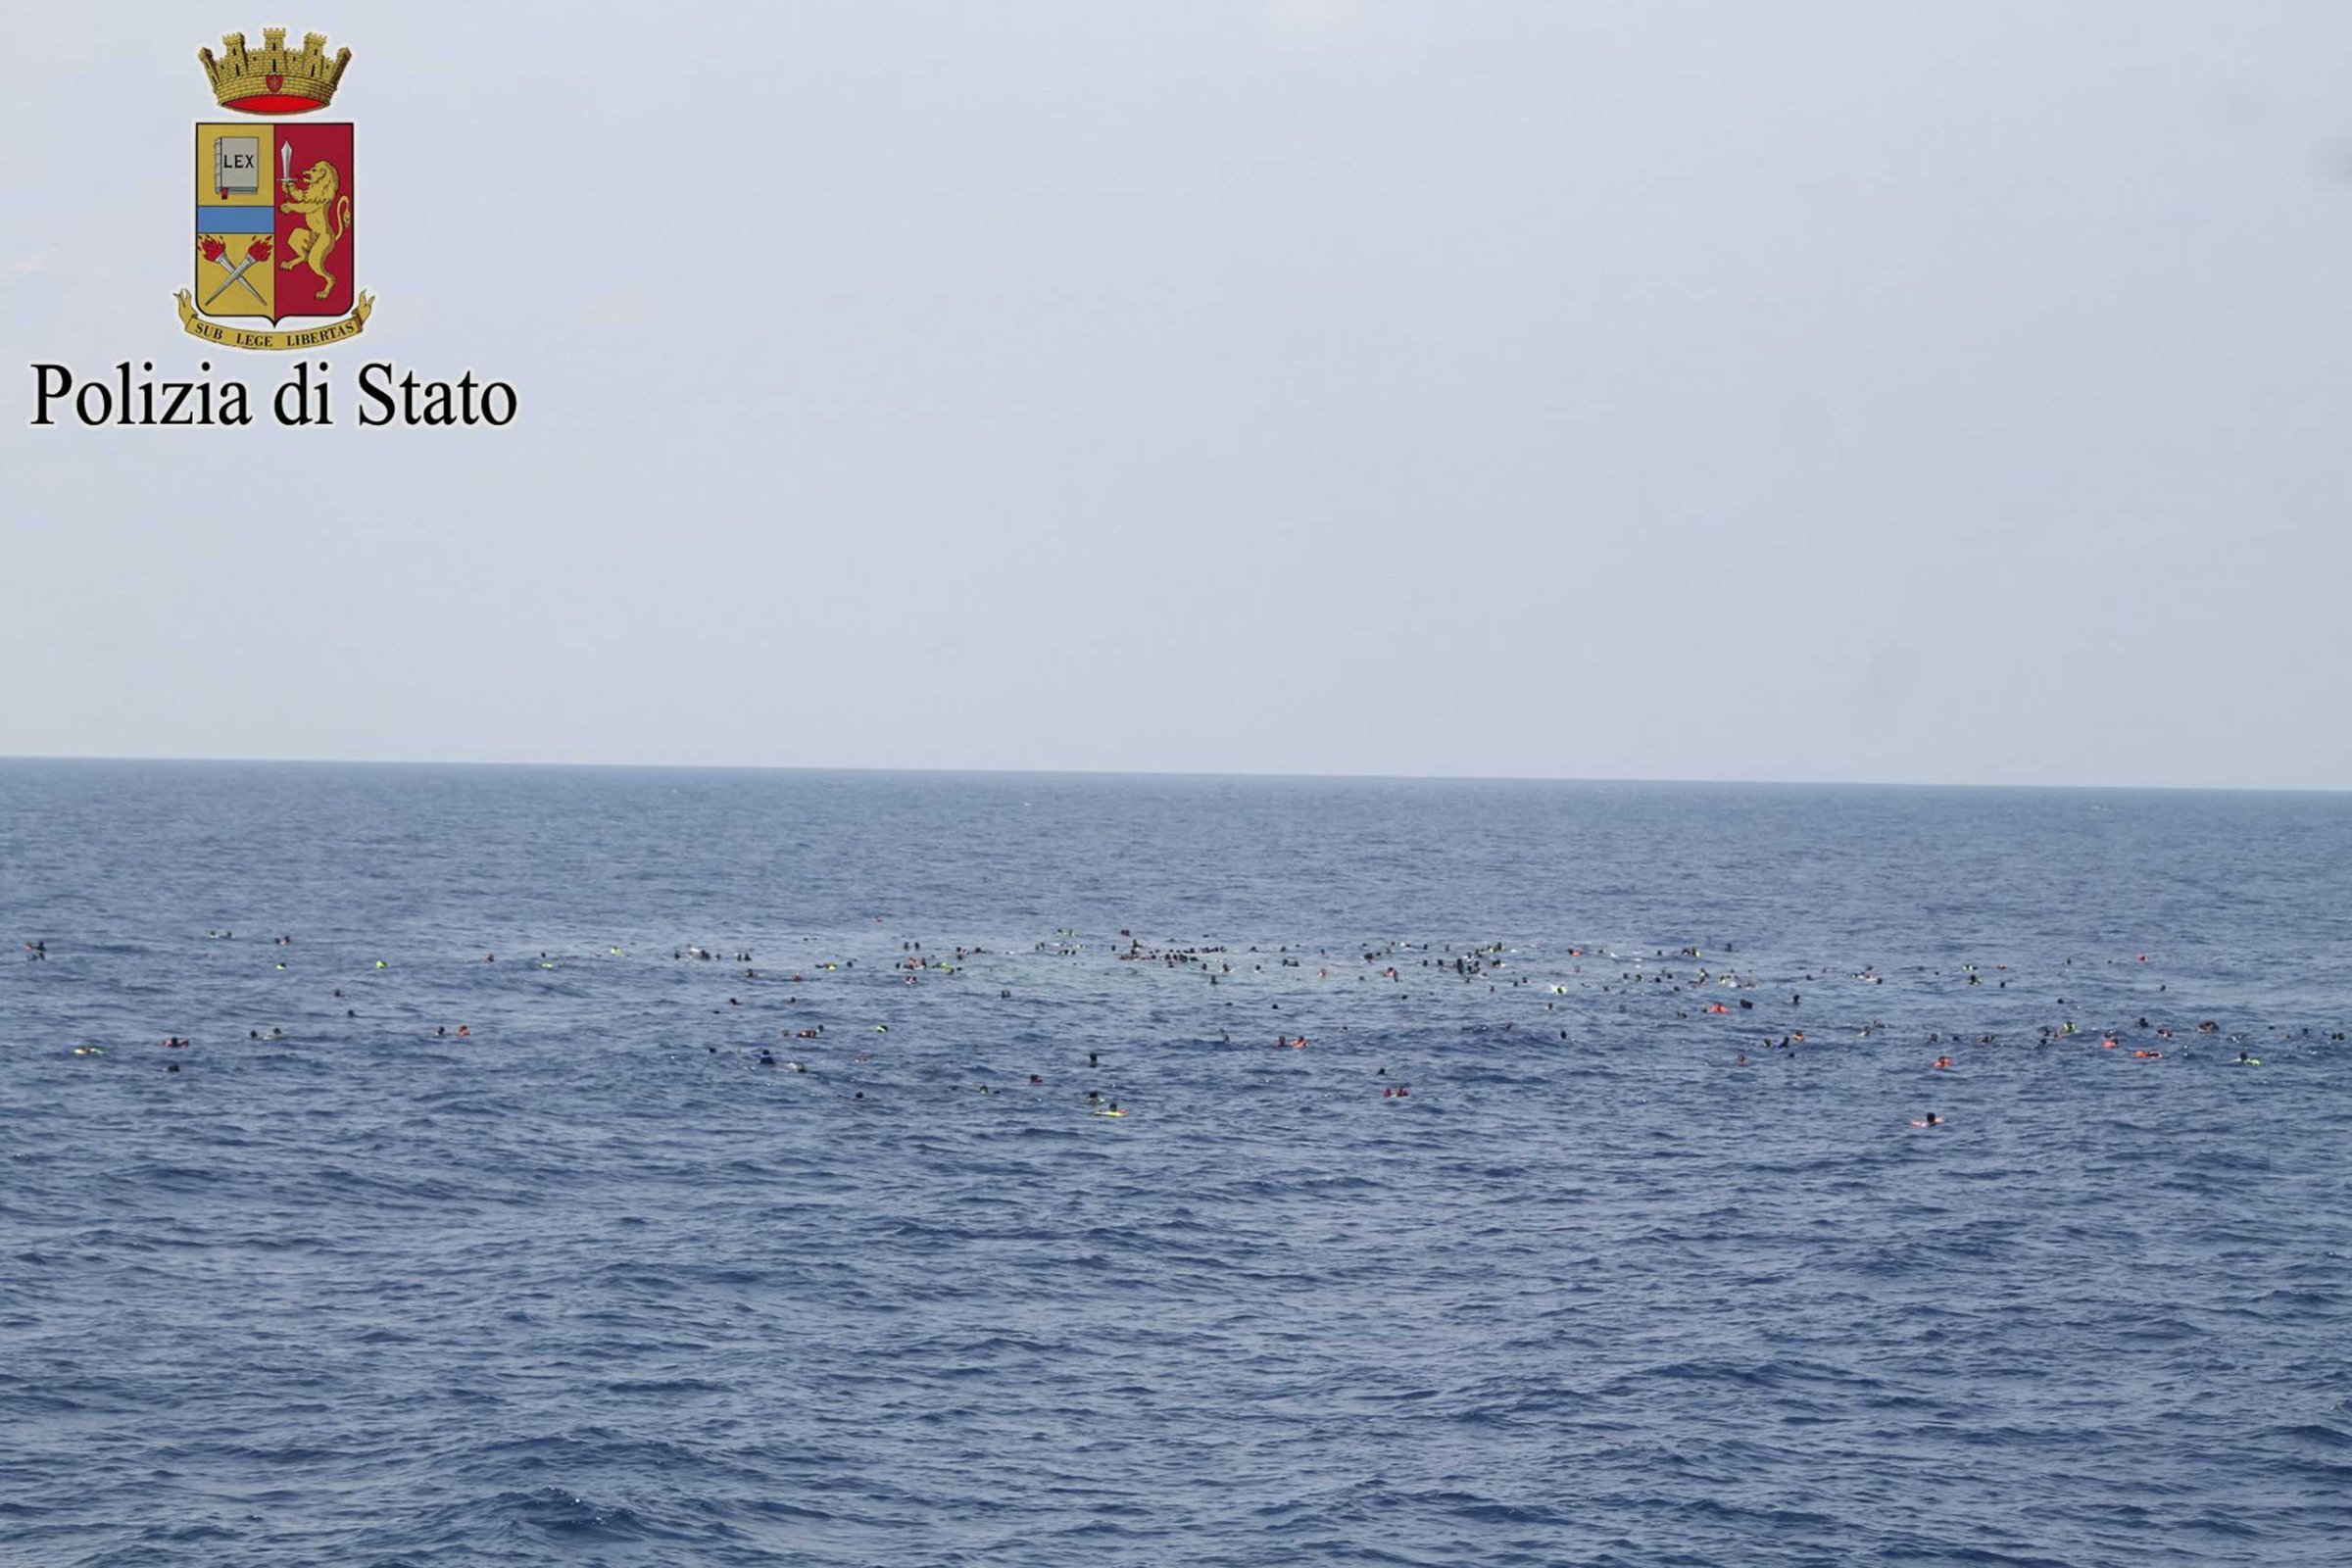 Migrants Mediterranean sinking coast Libya